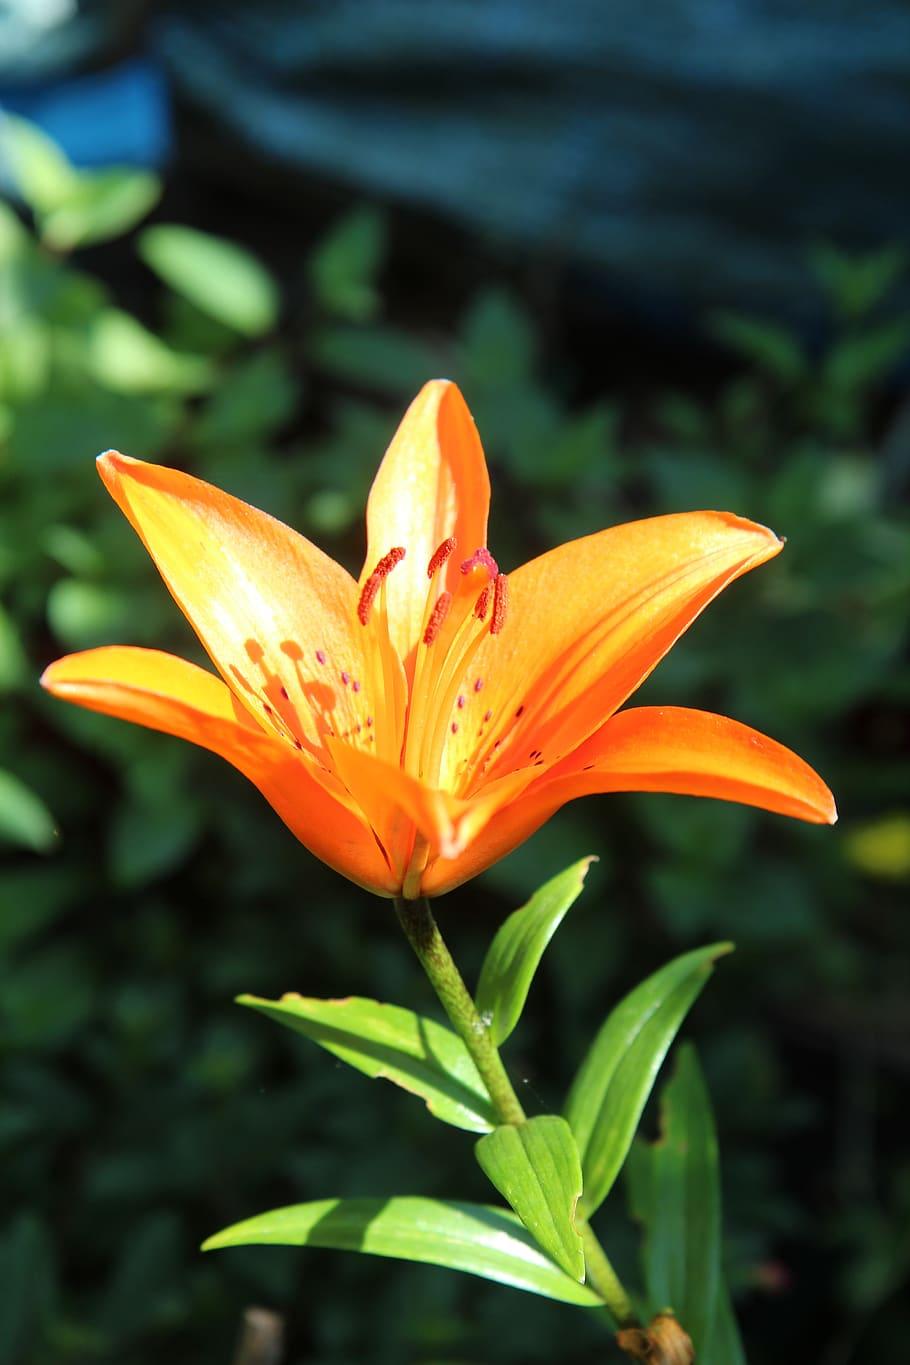 Orange flower, burgundy-orange stigma, dark-orange anthers, orange filaments, green stem and leaves.